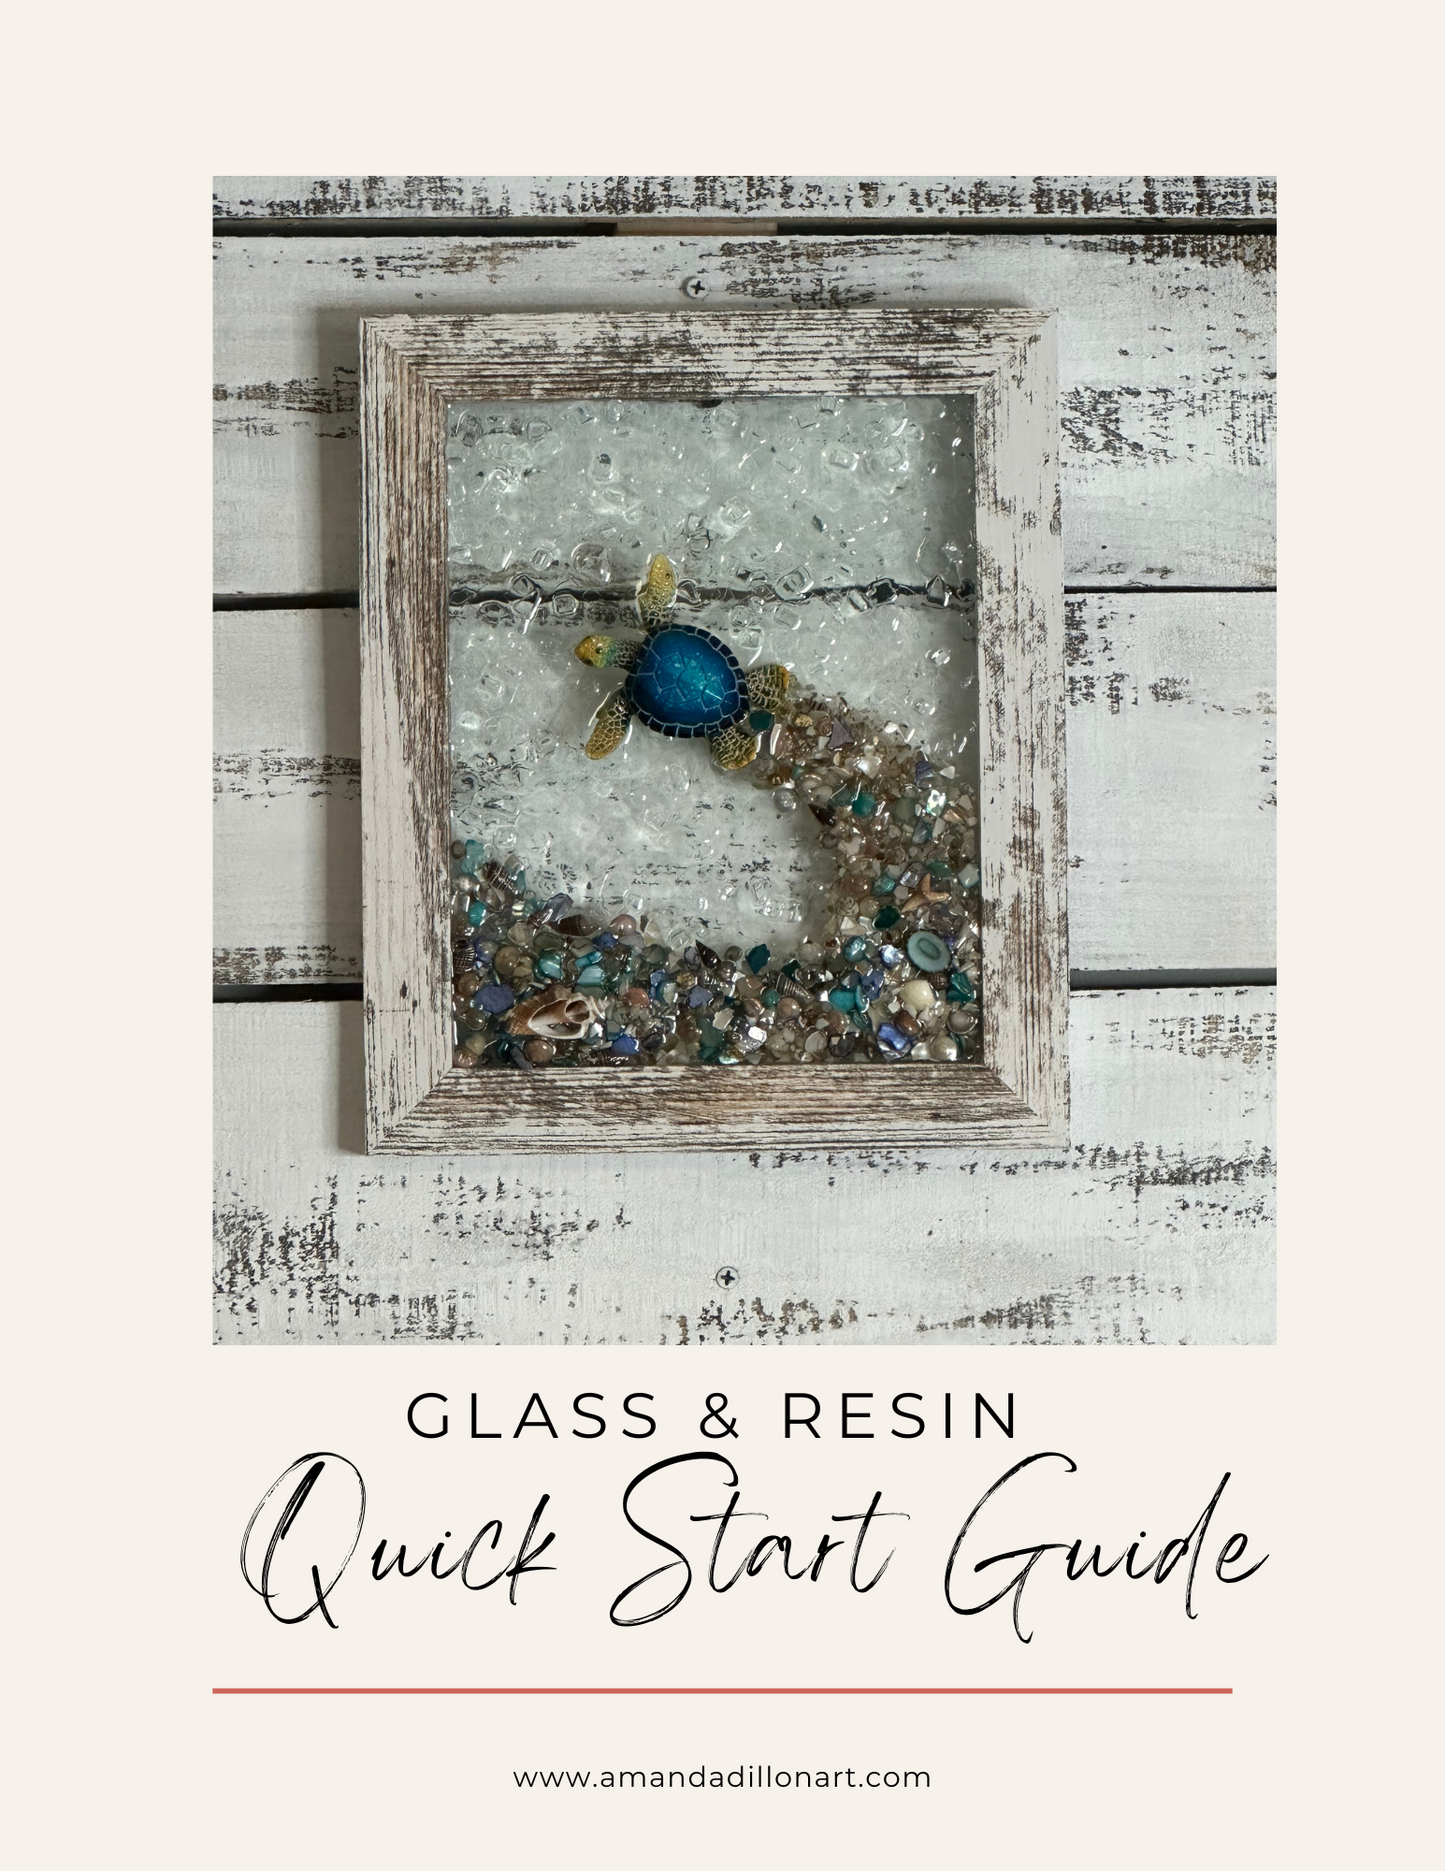 Glass & Resin Quick Start Guide